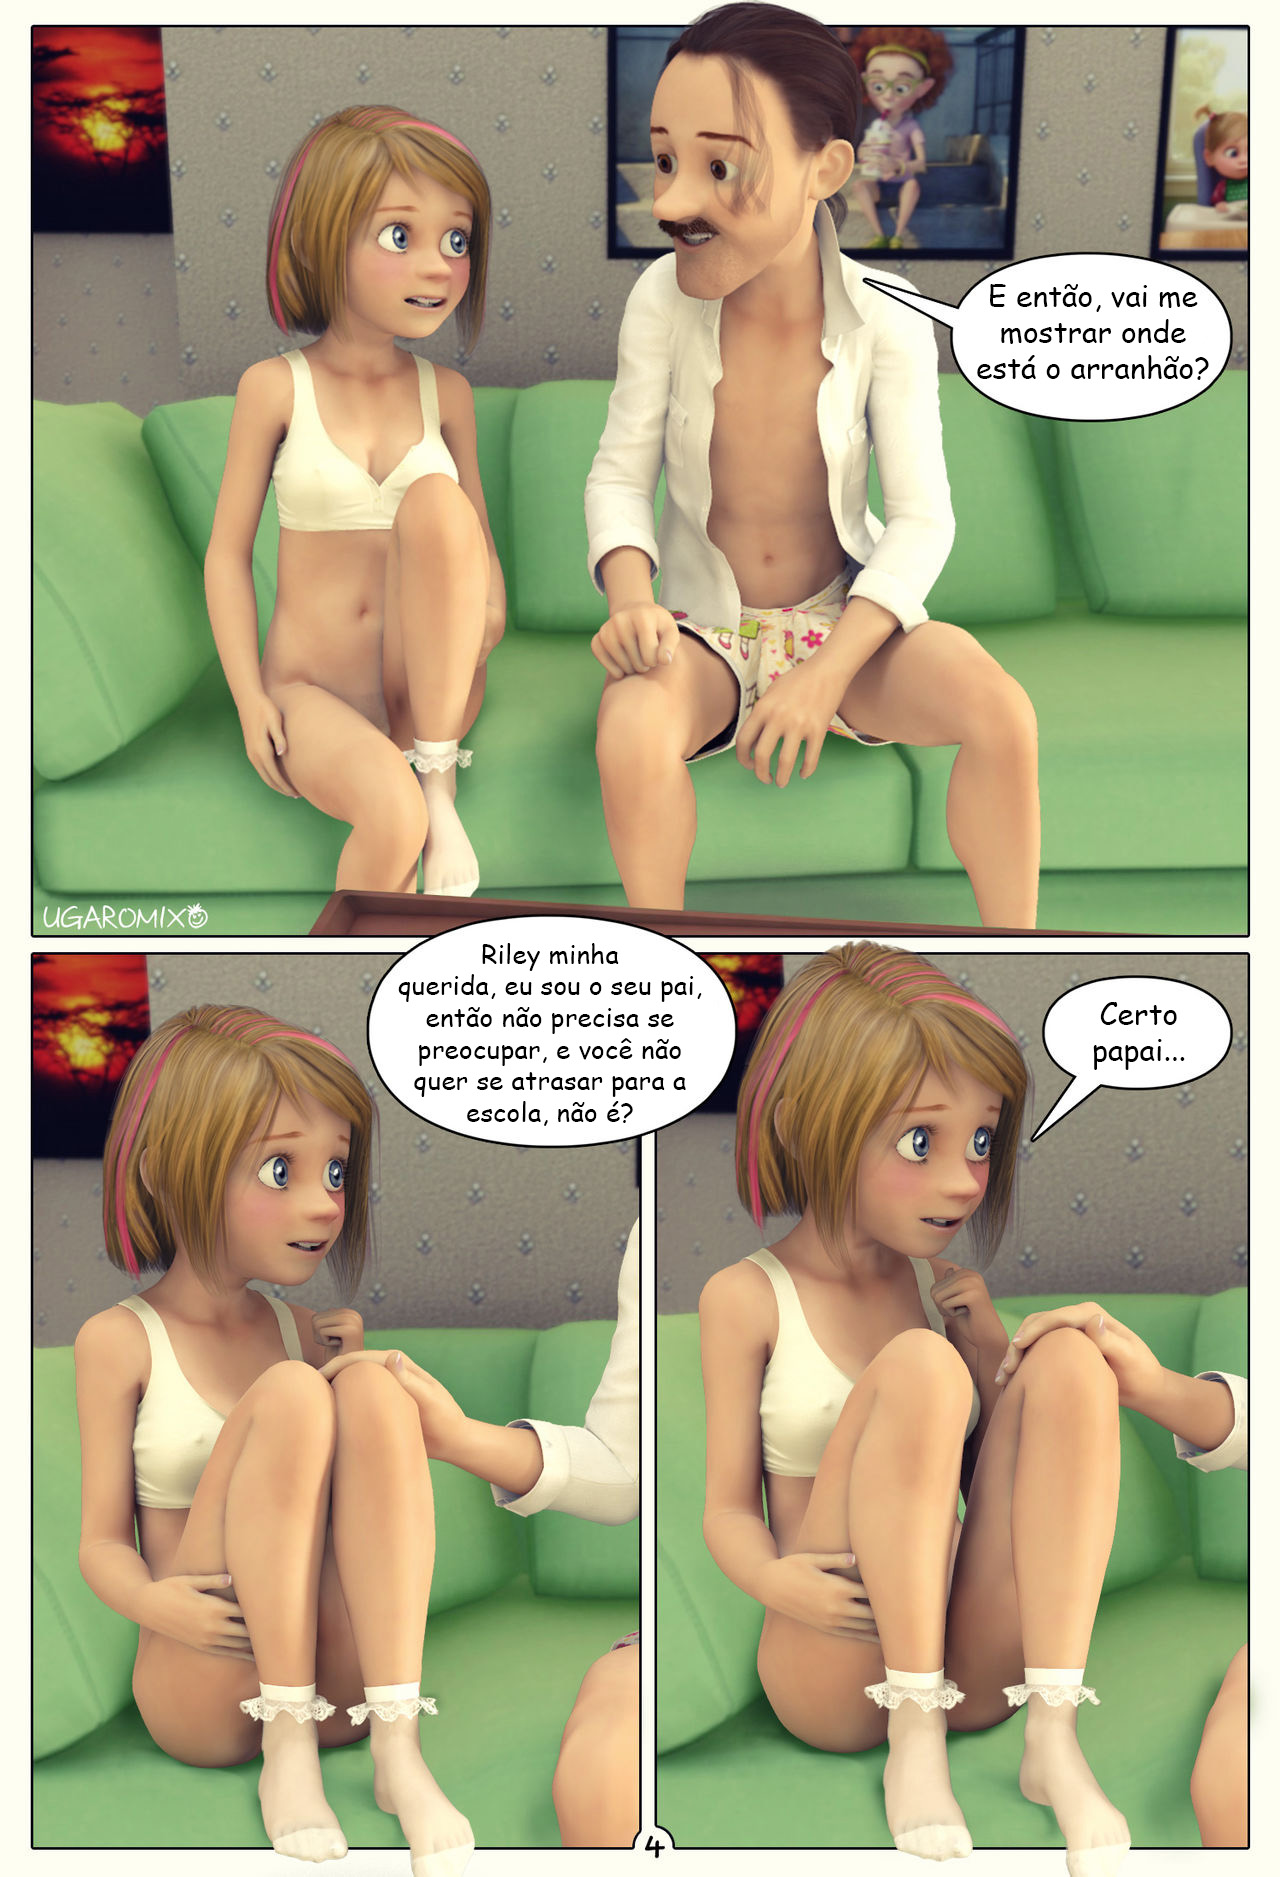 Image Of Berserk Anime Vice Comics Pinterest Hot Sex Picture